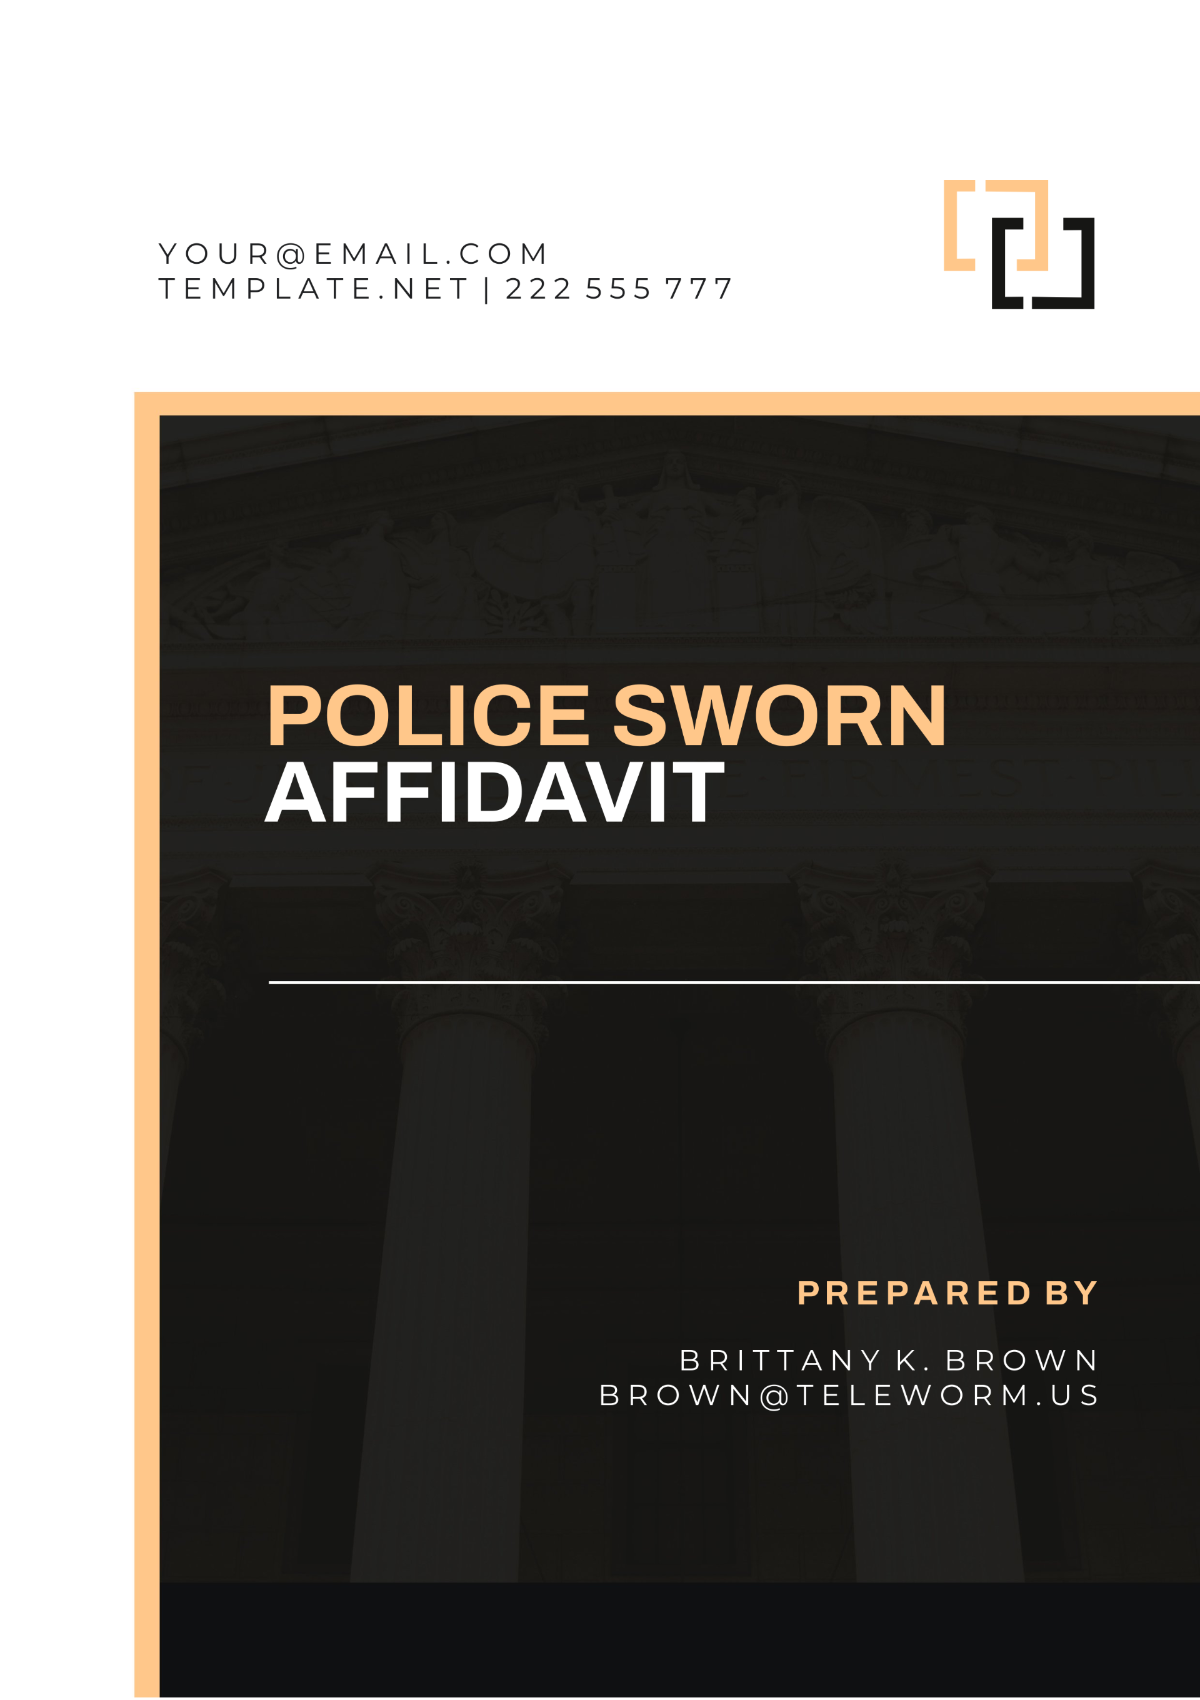 Police Sworn Affidavit Template